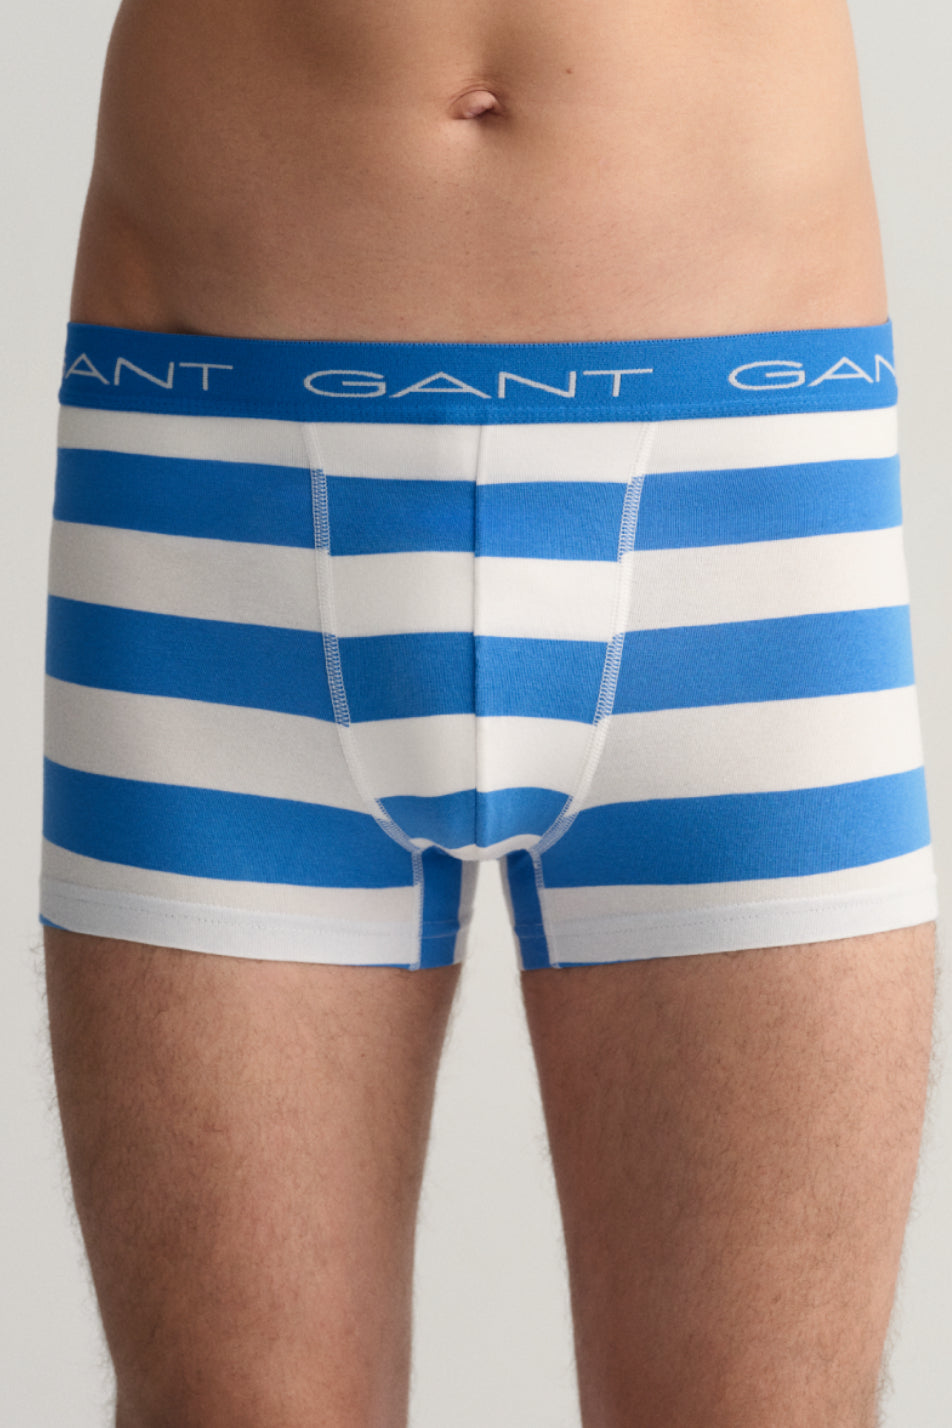 Gant 3 Pack Men's Rugby Stripe Trunk